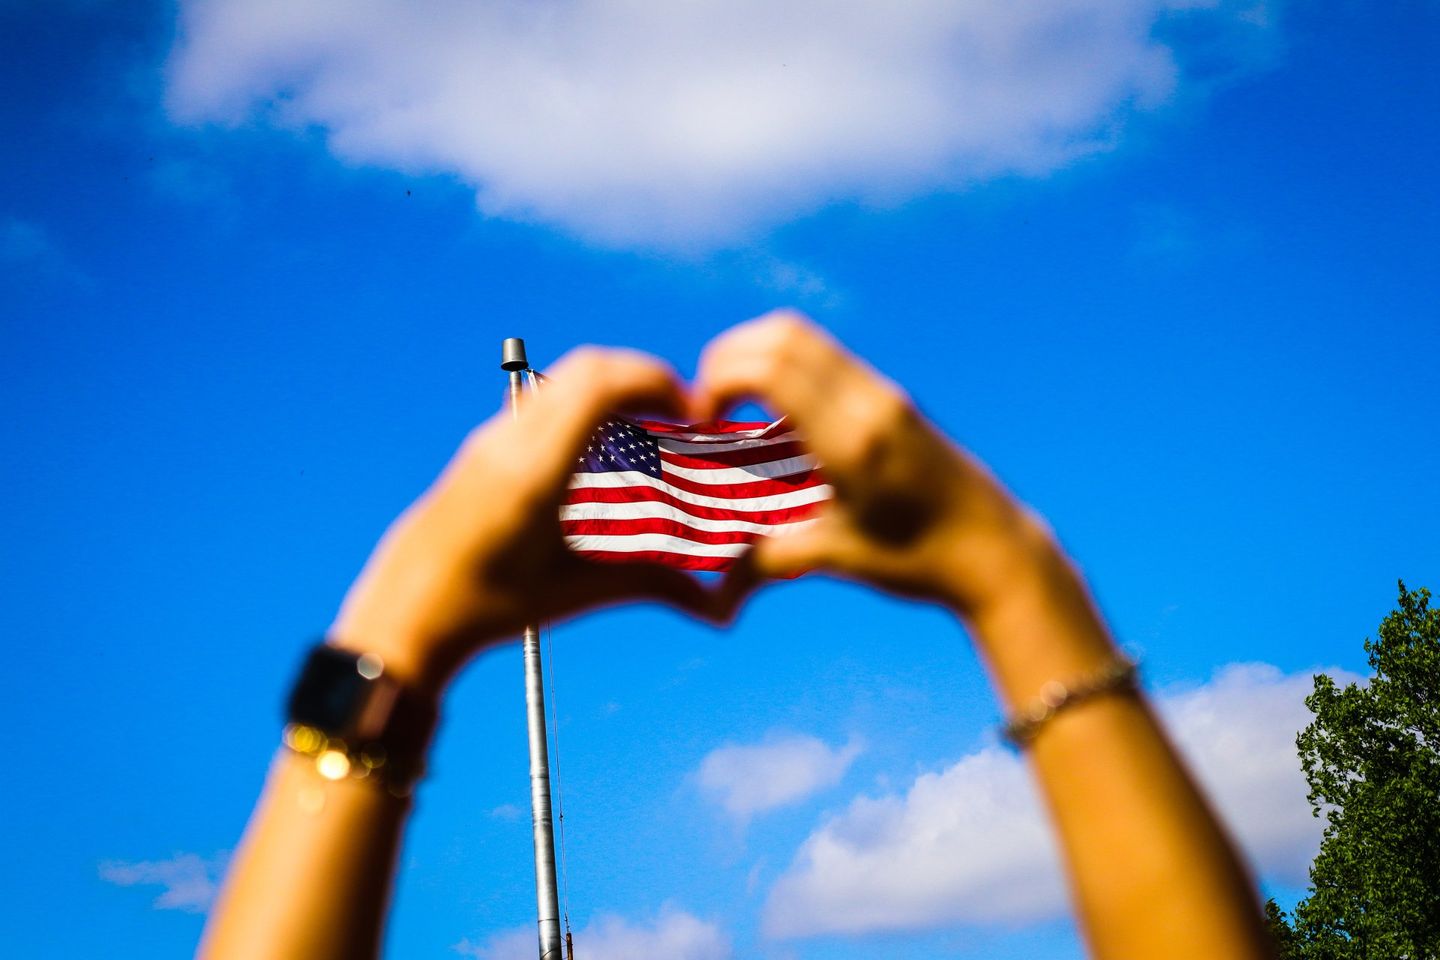 Hands held in heart shape over flag